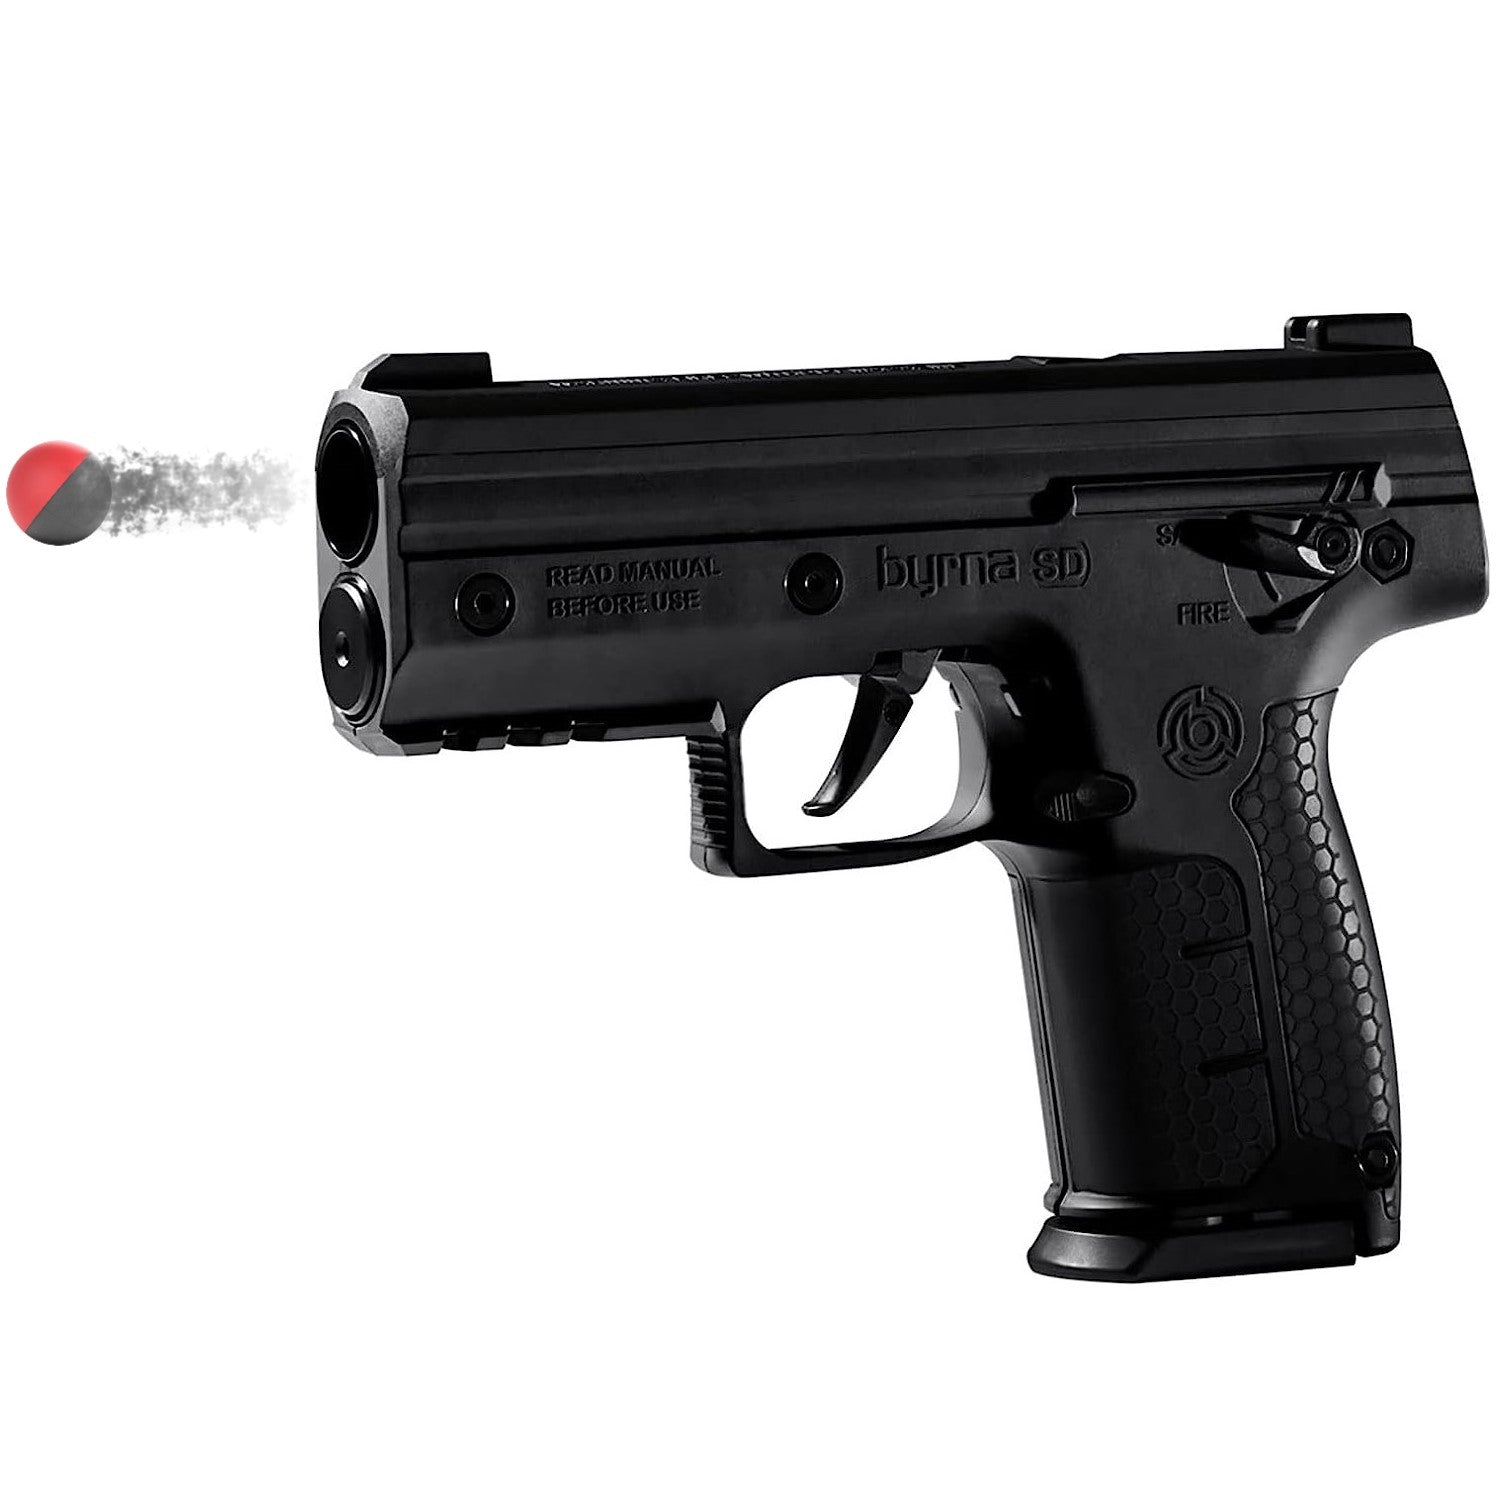 Byrna SD Pepper Non-Lethal Self-Defense Projectile Gun Bundle